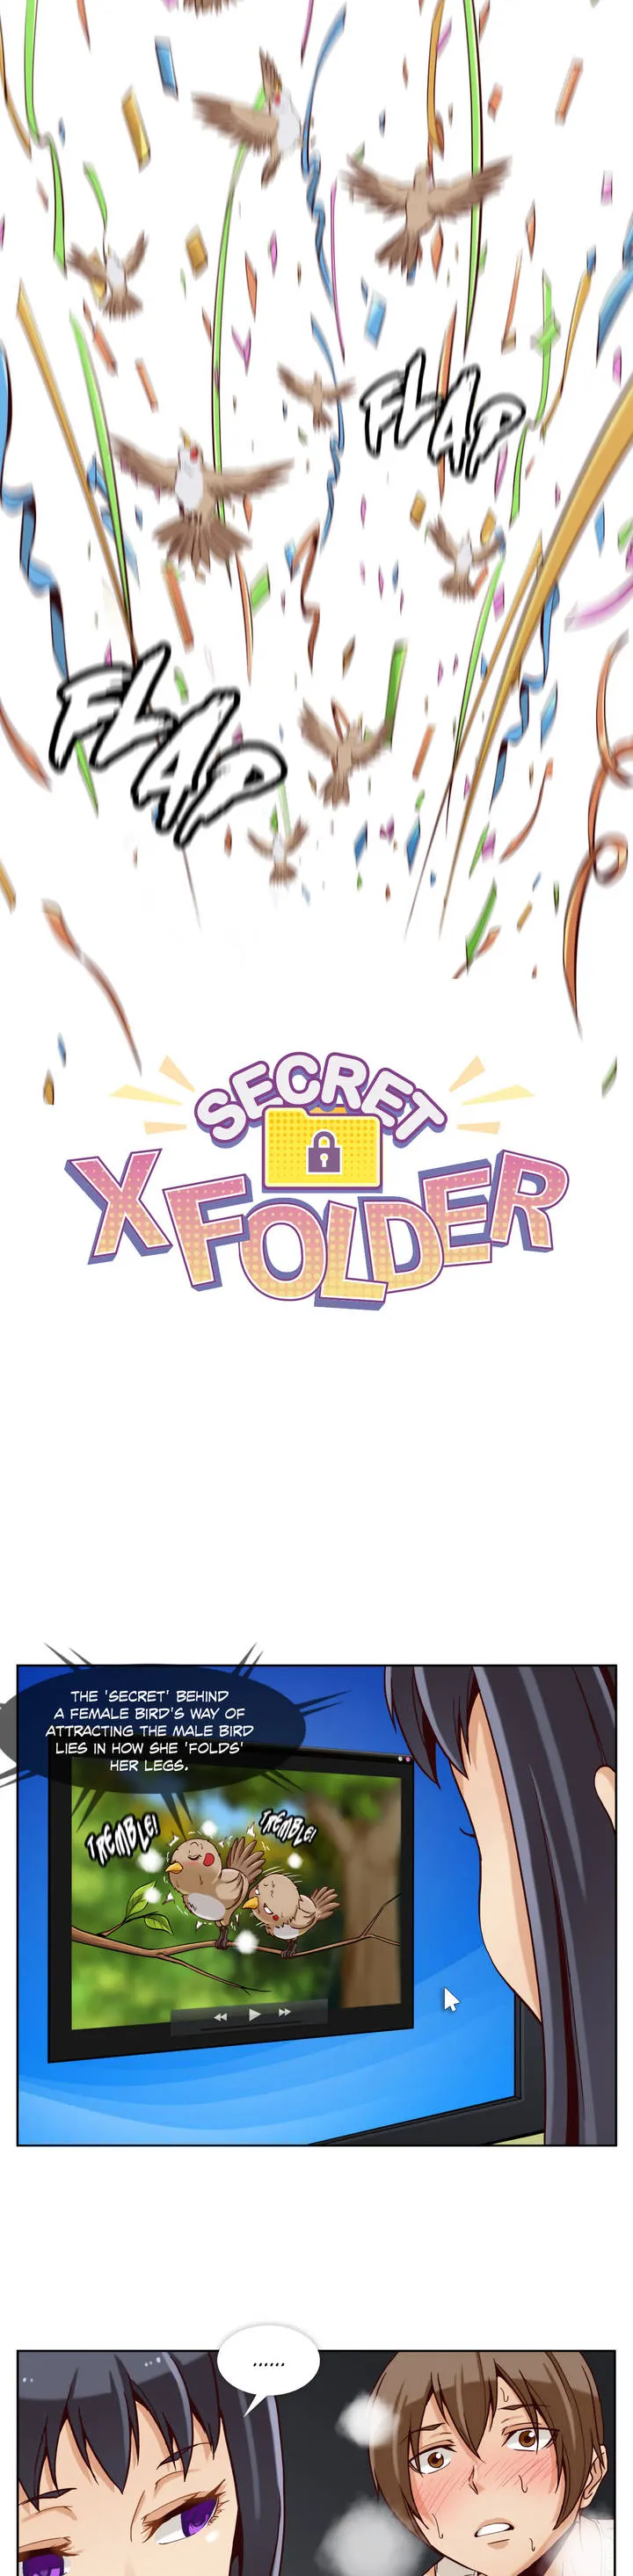 Secret X Folder image